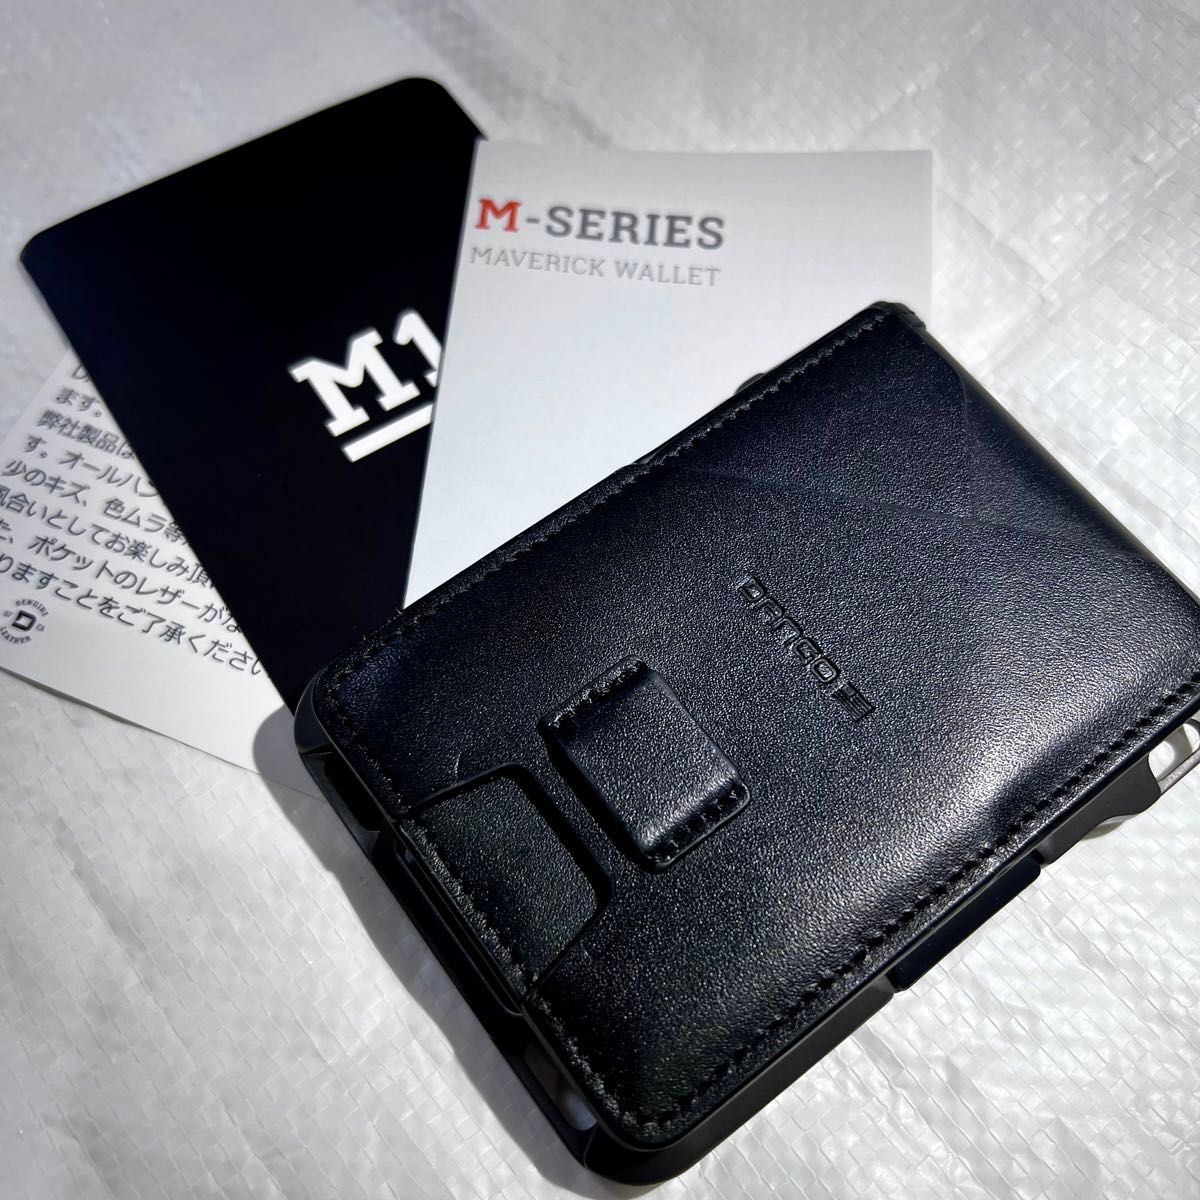 Dango Products M1 Maverick Wallet